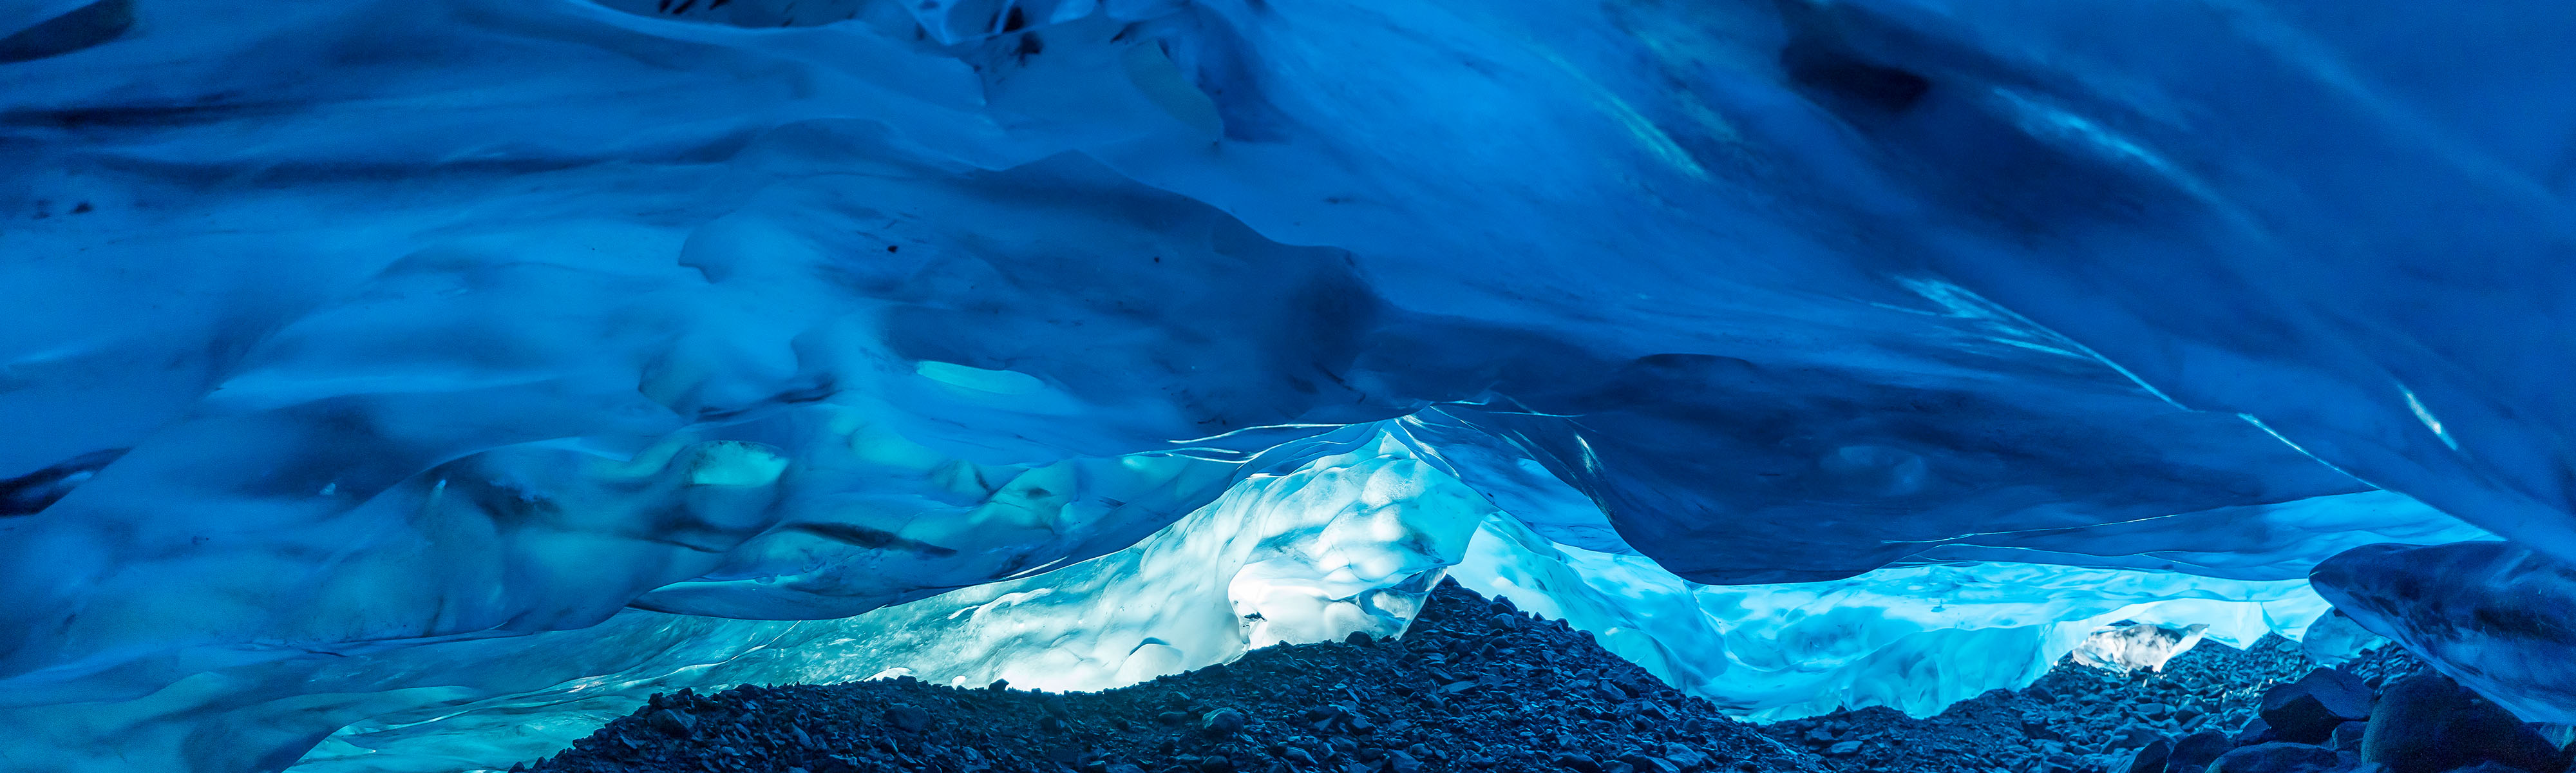 Sliderbild Ice cave Island